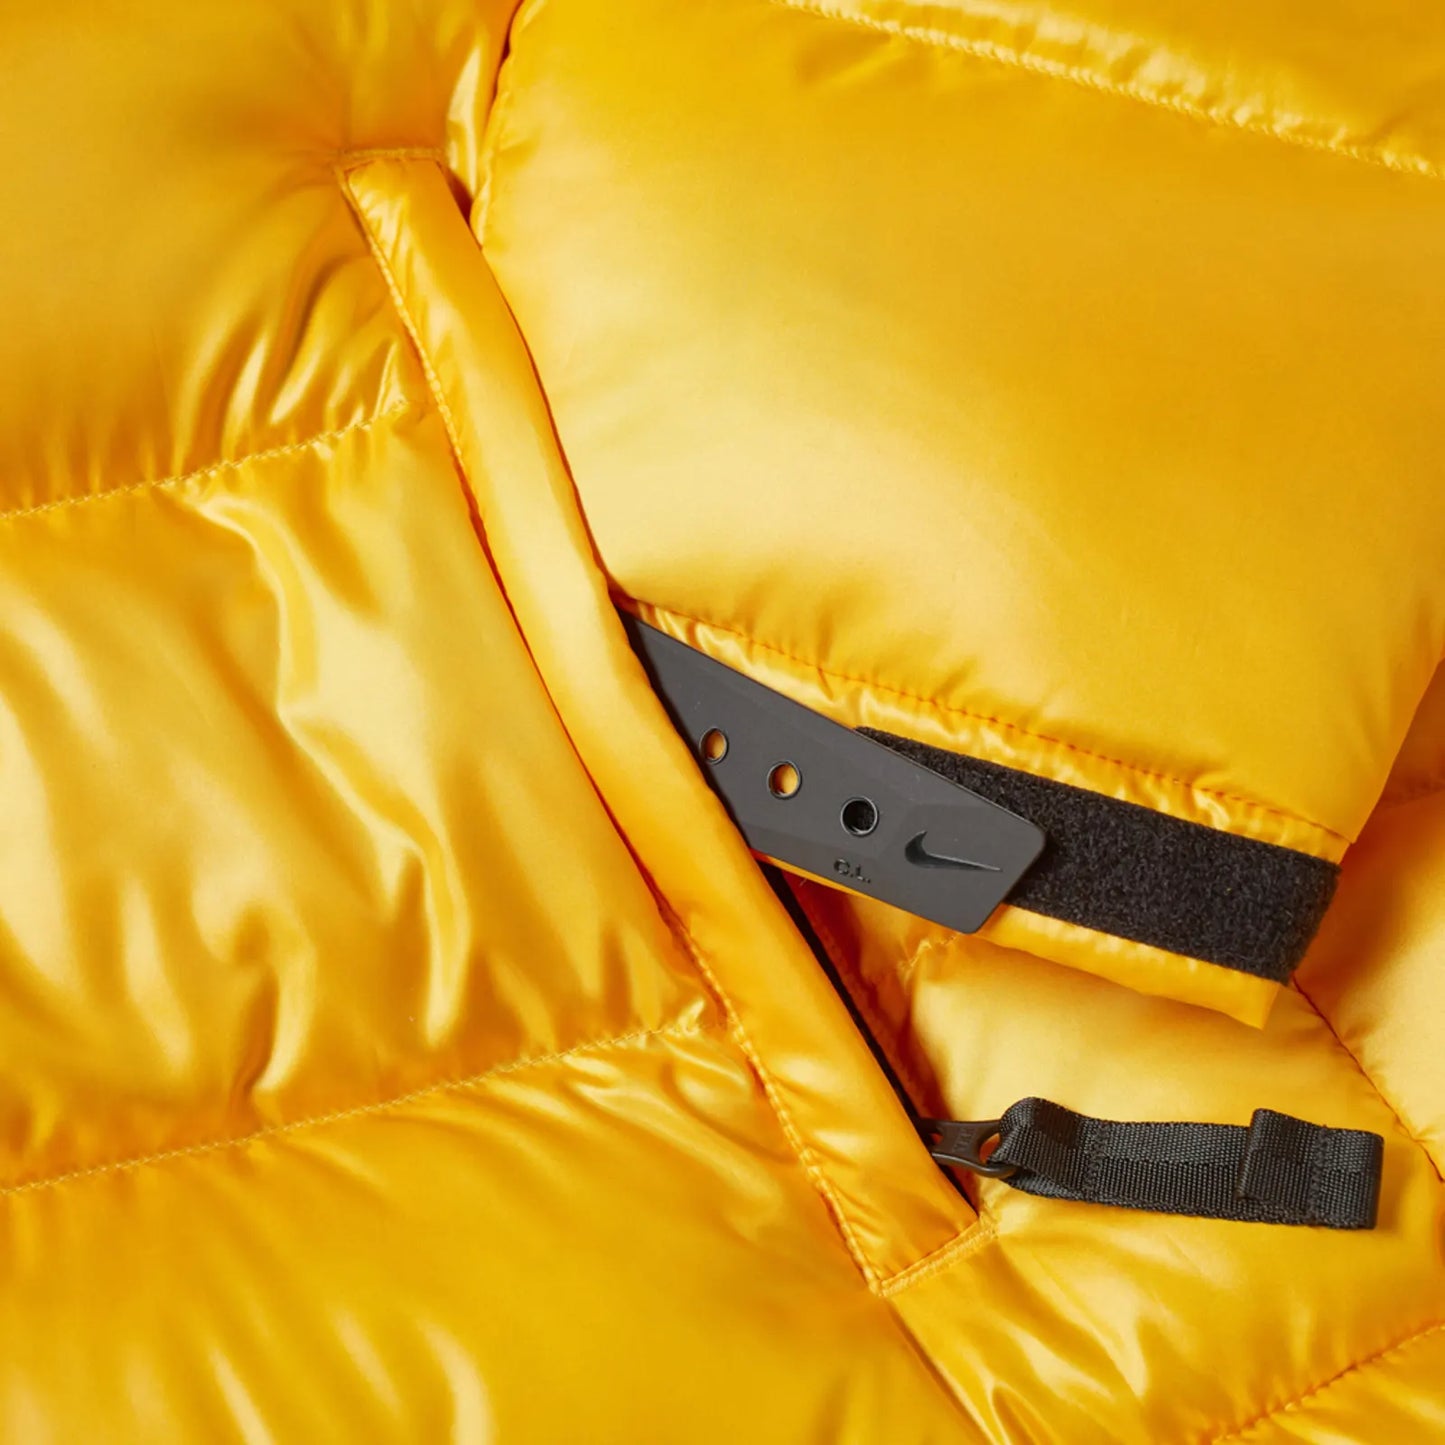 Nike x NOCTA Puffer Jacket “Yellow”